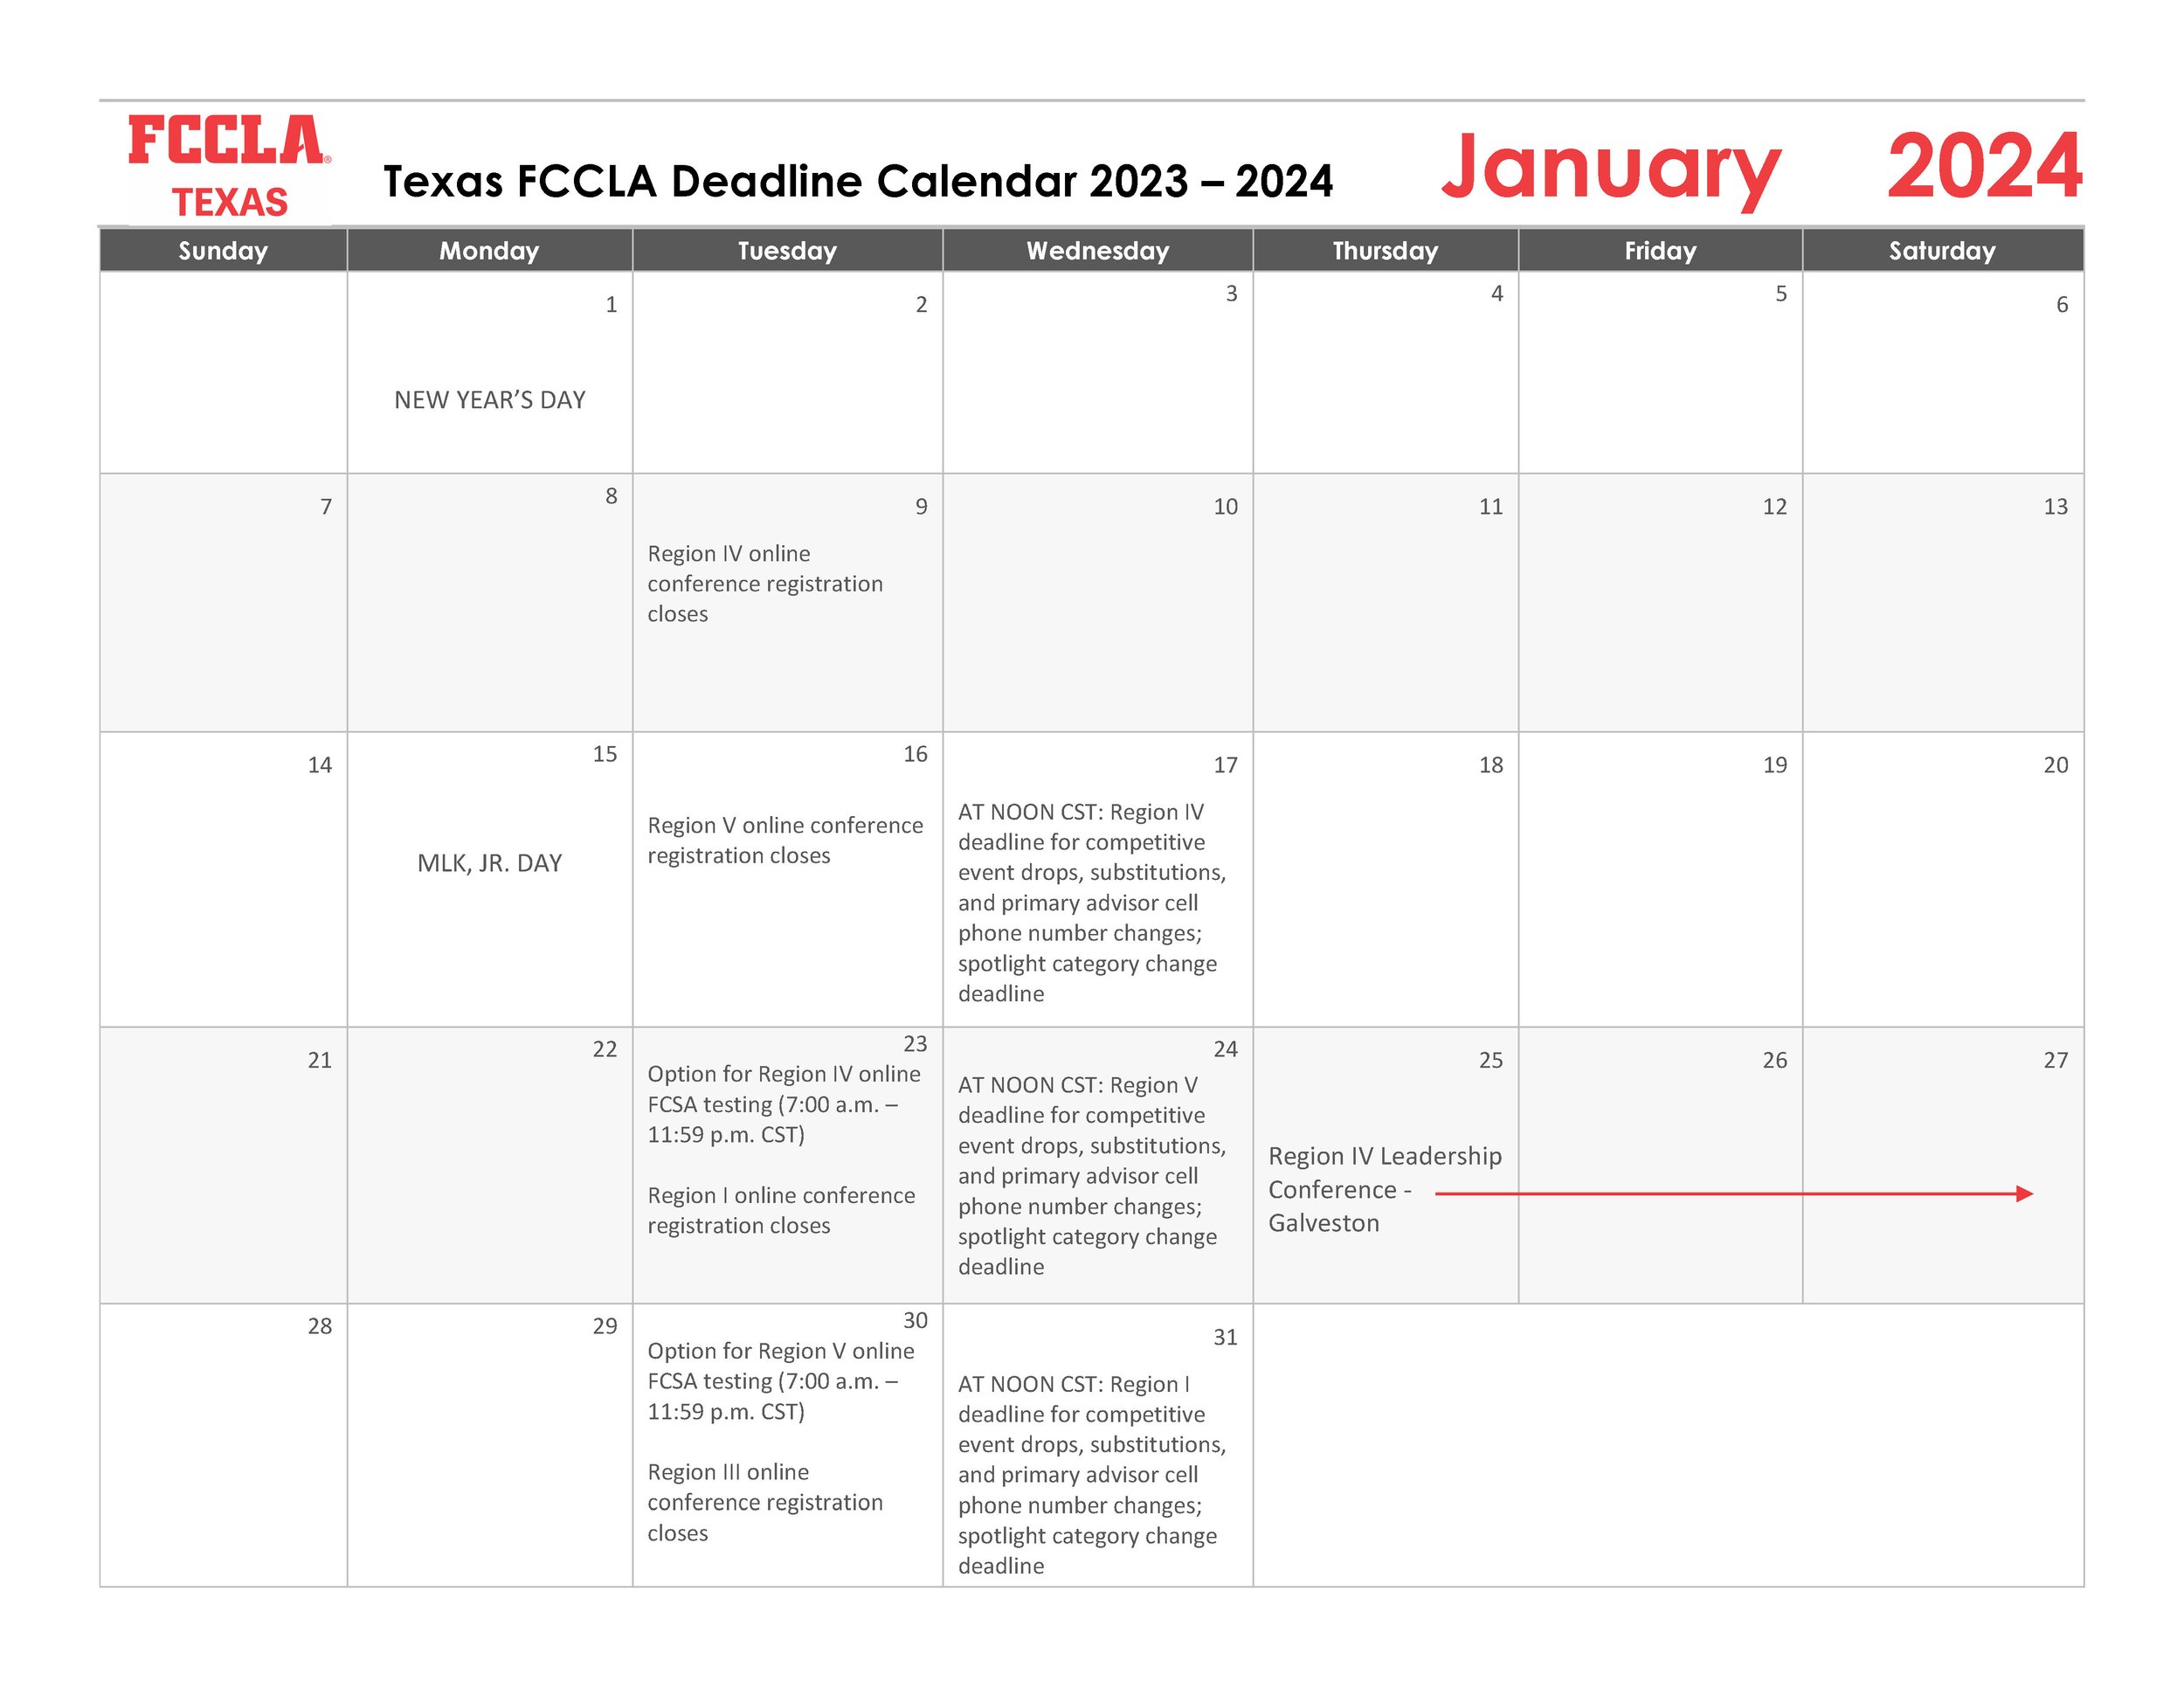 Deadline Calendar 2023 - 2024_Page_06.jpg